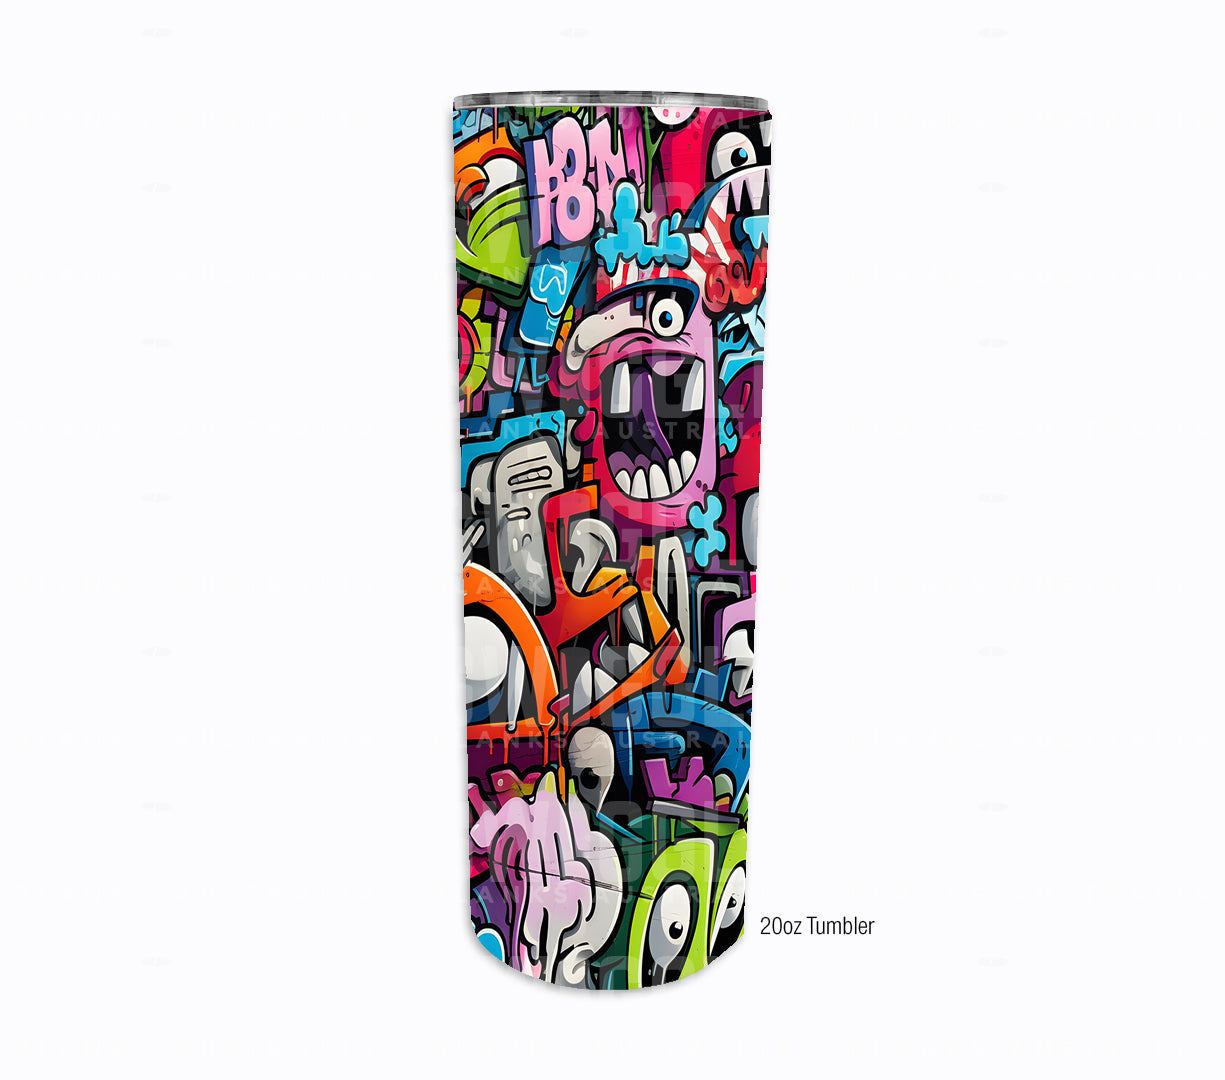 Graffiti Kids #18 - Digital Download - Assorted Bottle Sizes